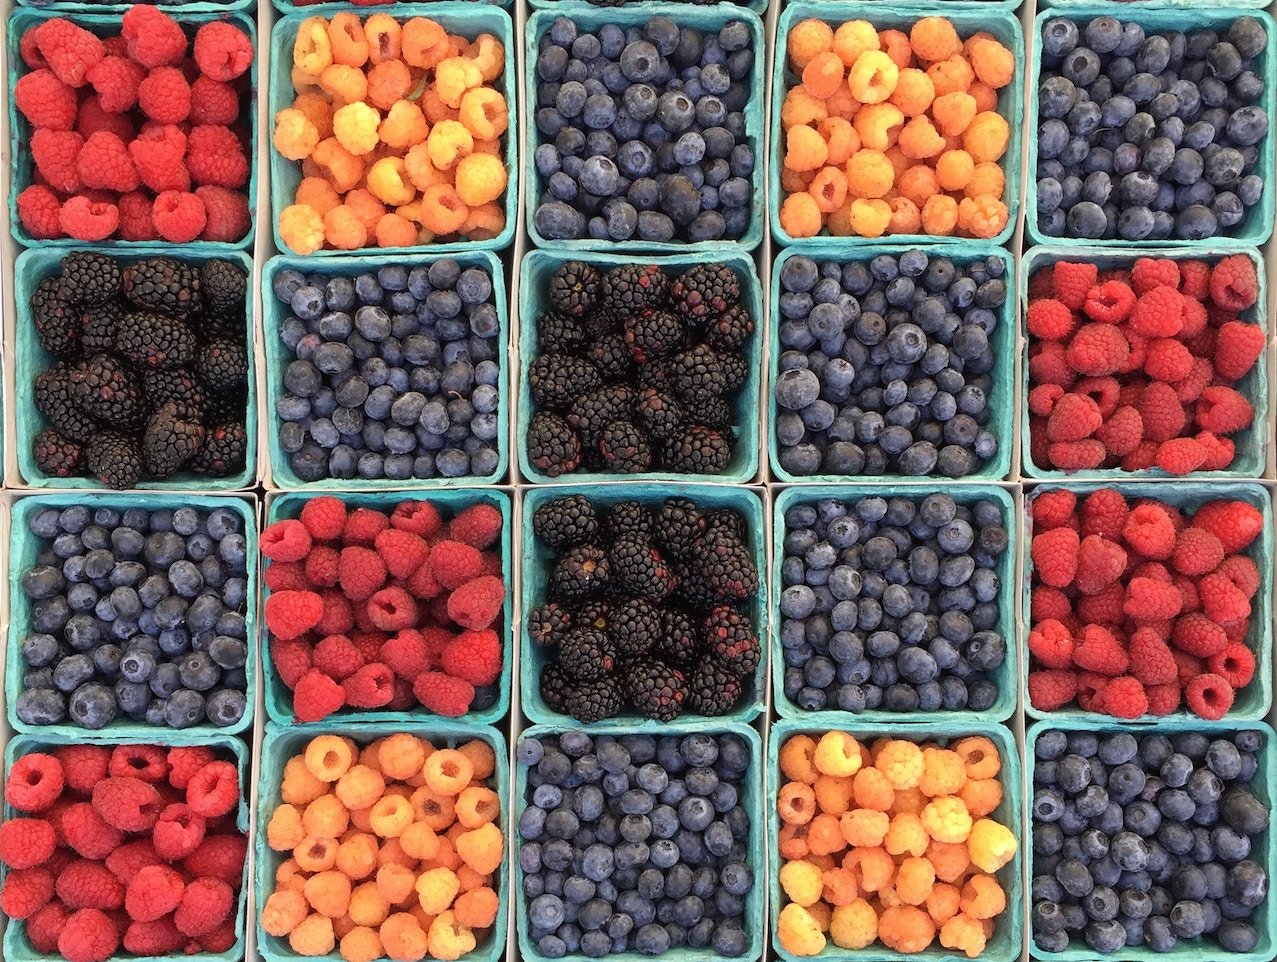 Freezer storage - Pints of fresh berries: How to use up overripe fruit